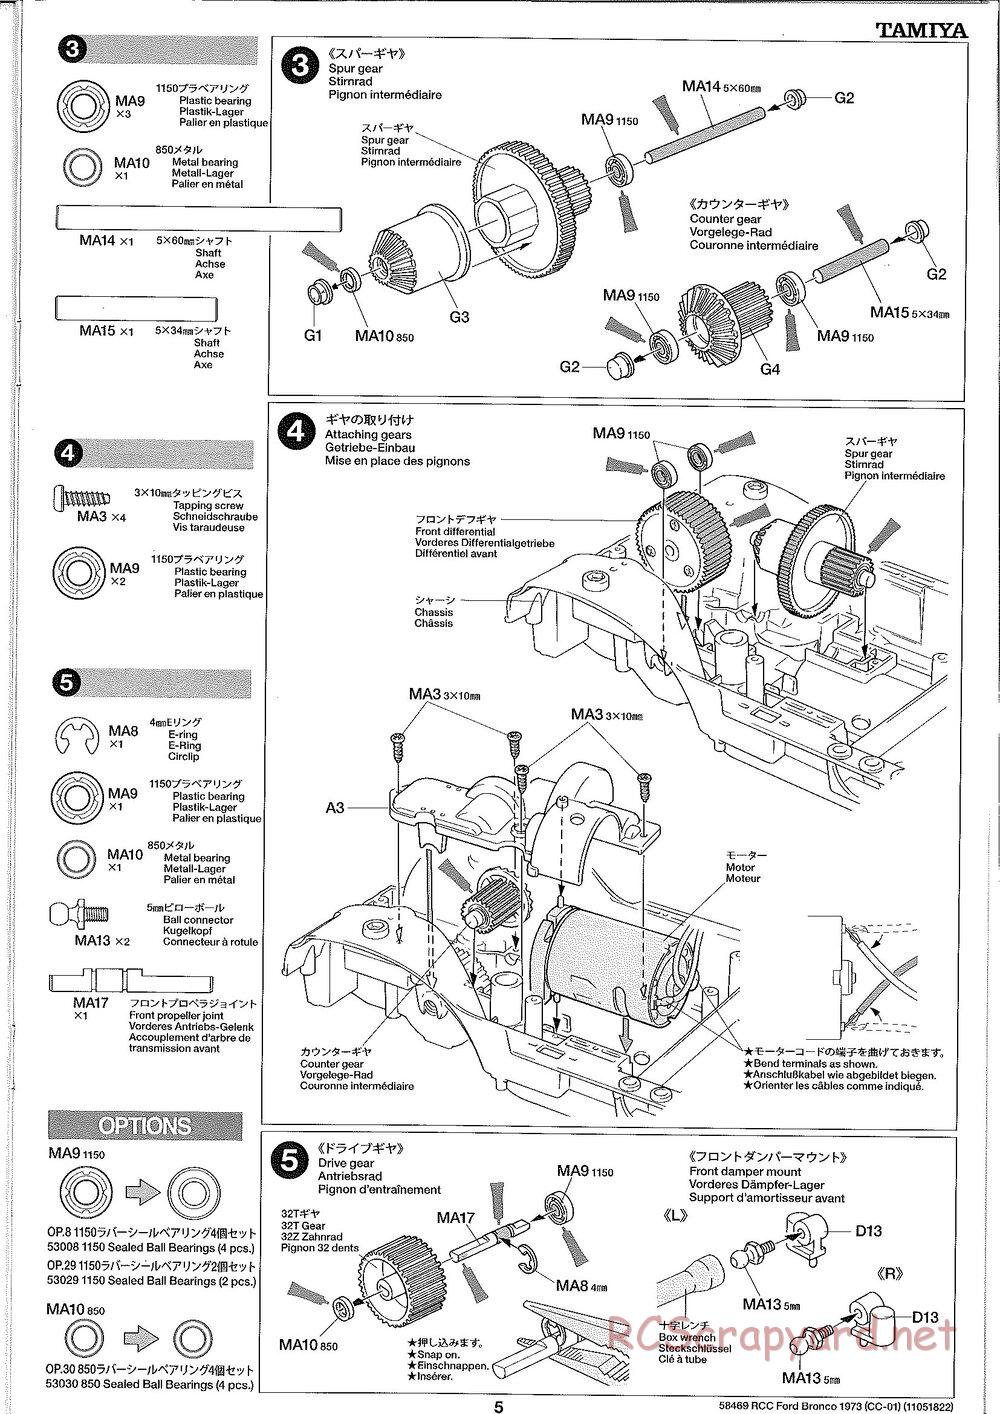 Tamiya - Ford Bronco 1973 - CC-01 Chassis - Manual - Page 5